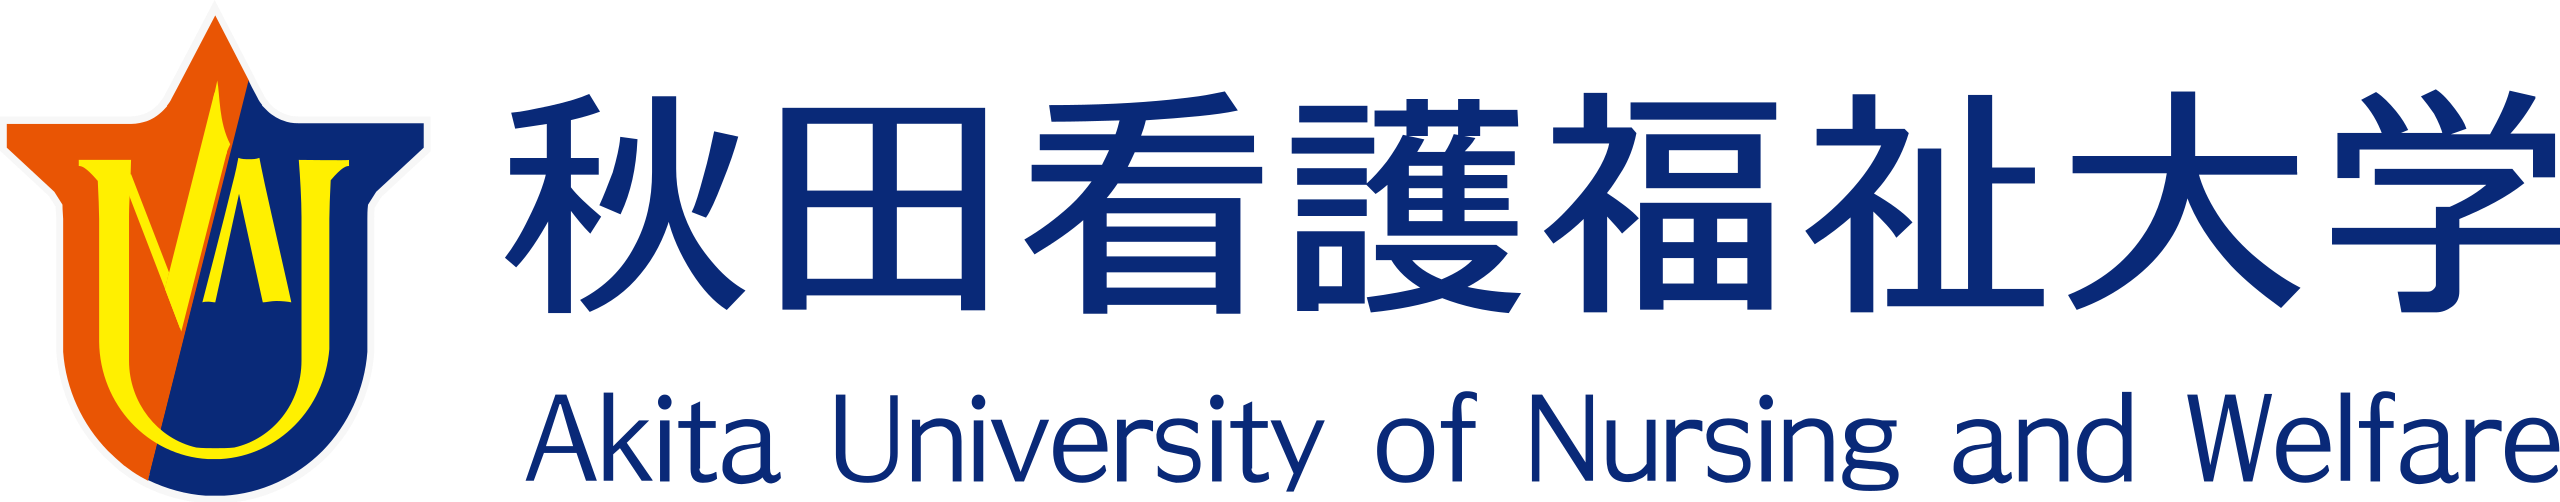 Akita University of Nursing and Welfare Japan